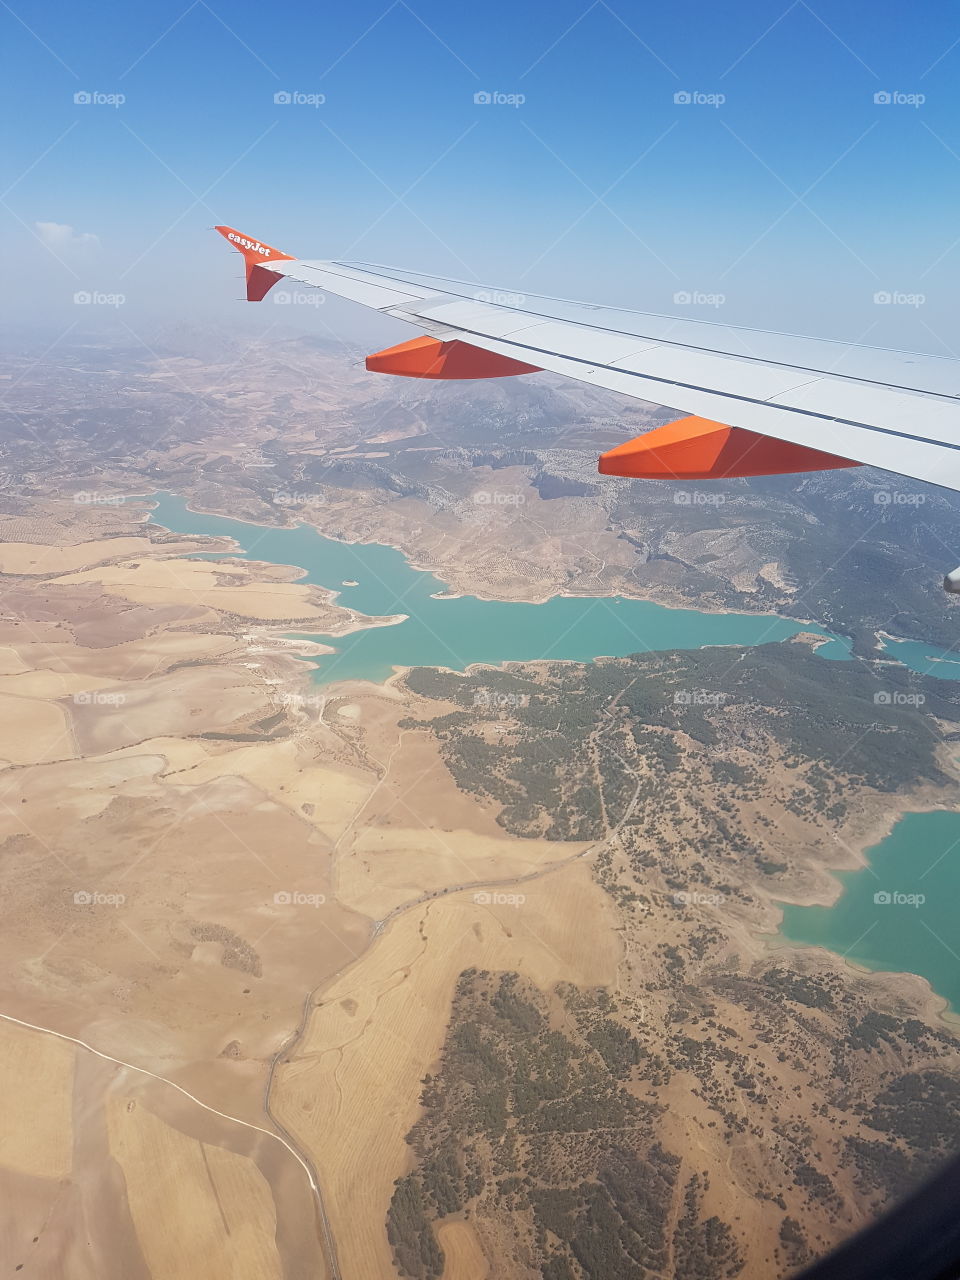 Lakes to the North or Malaga